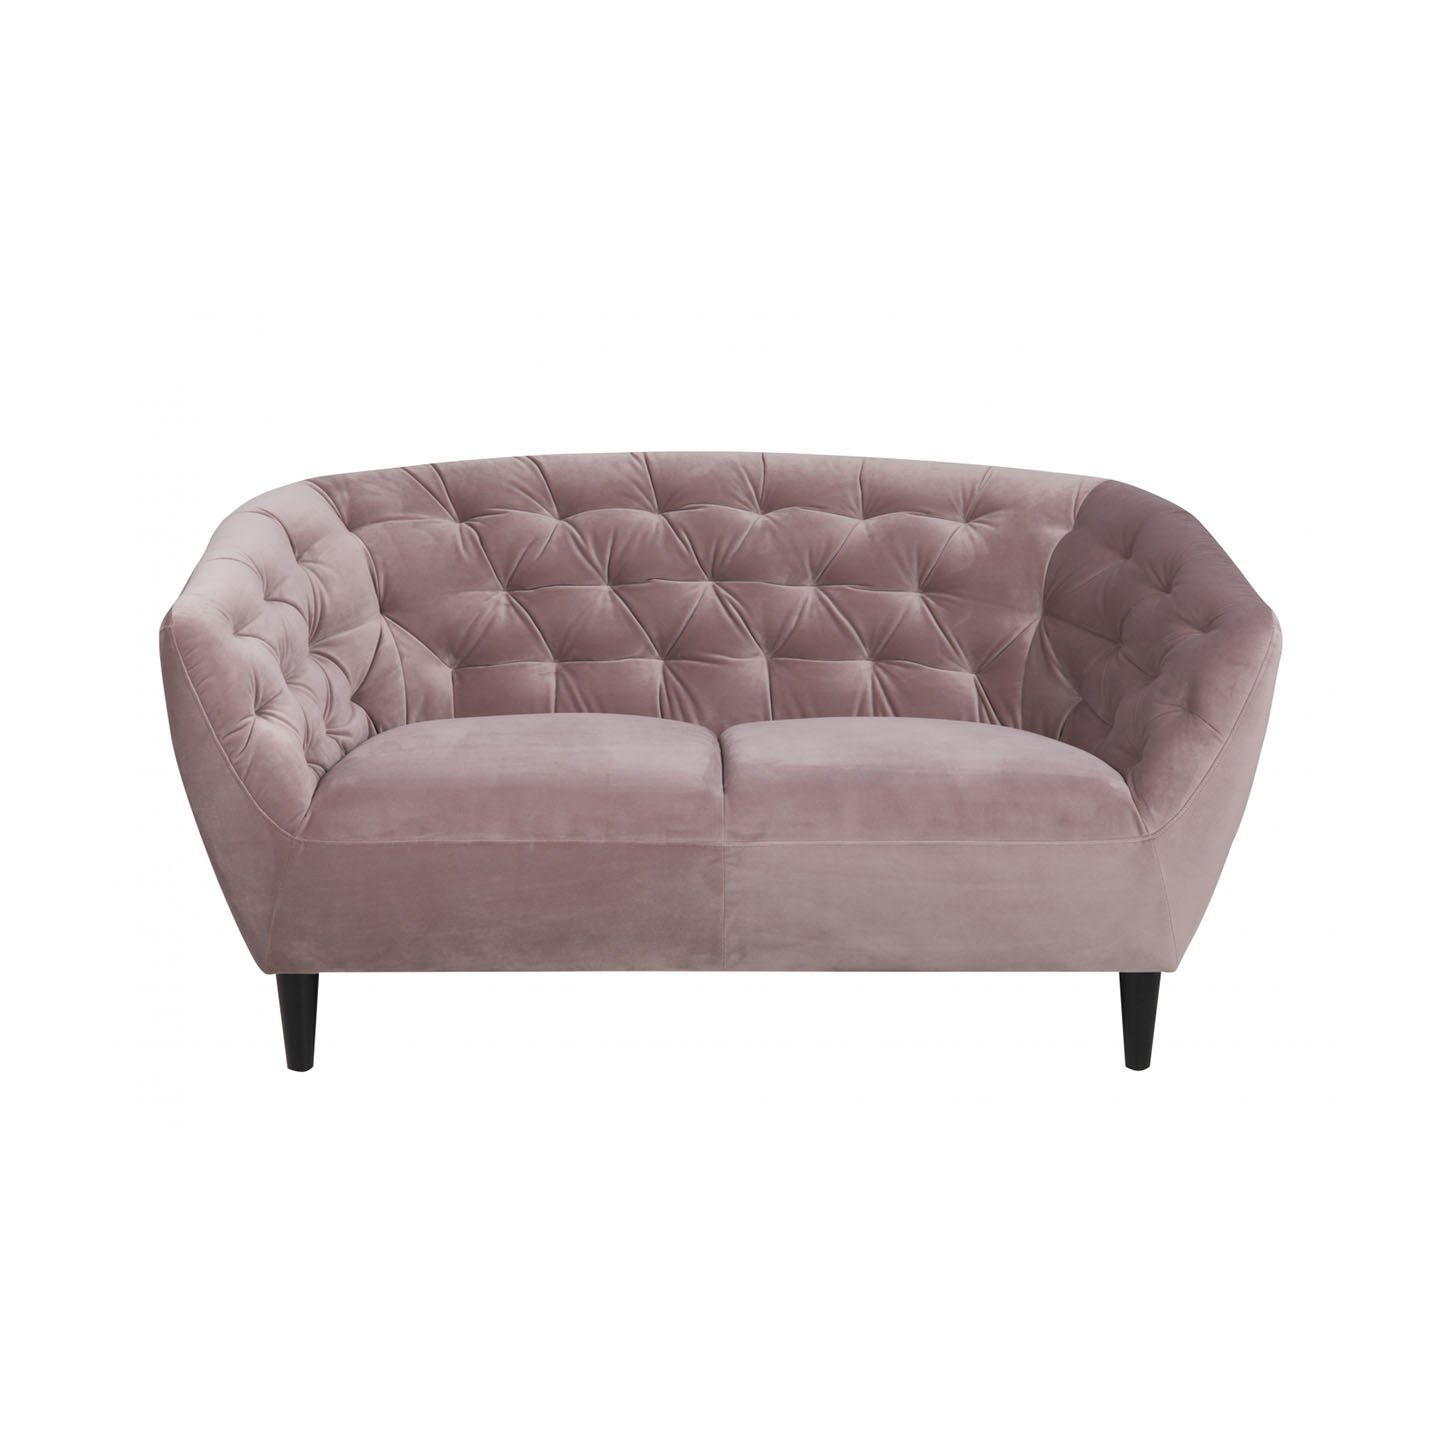 ebuy24 Sofa Rian 2 Personen Sofa rosa mit schwarzen Beinen., 1 Teile